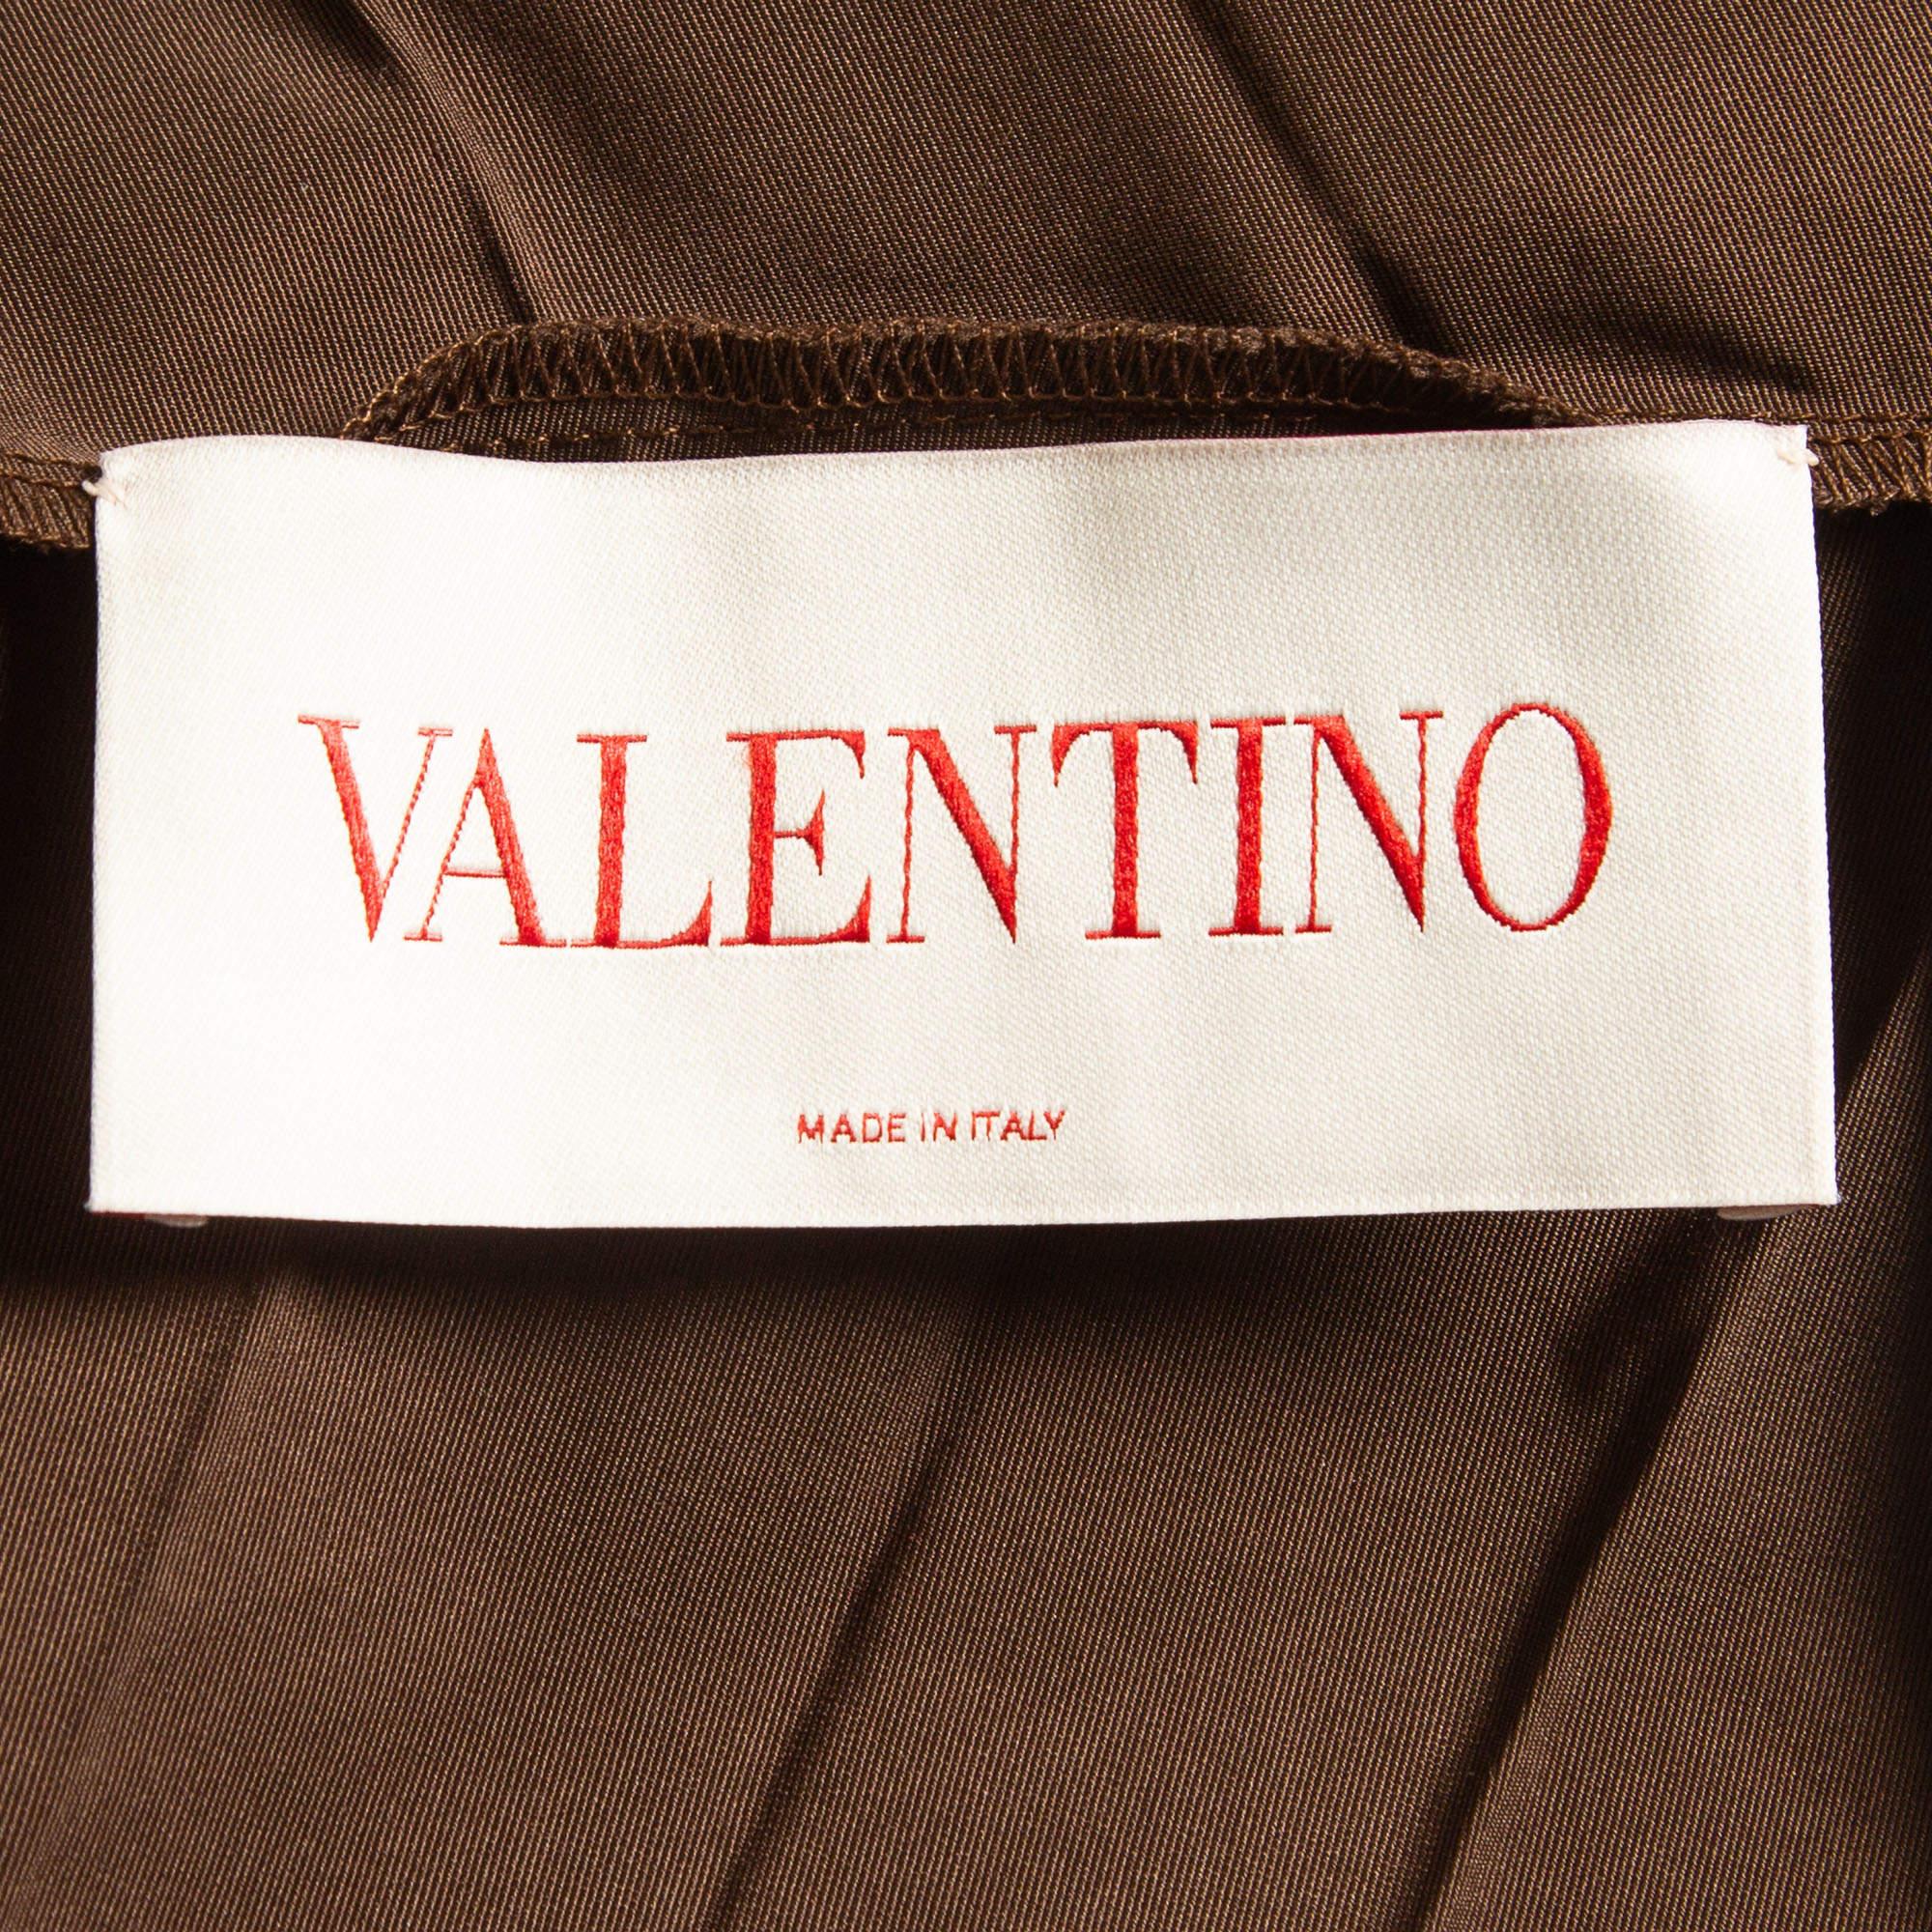 Valentino Brown Cotton Blend Micro Faille Plisse Dress S For Sale 4